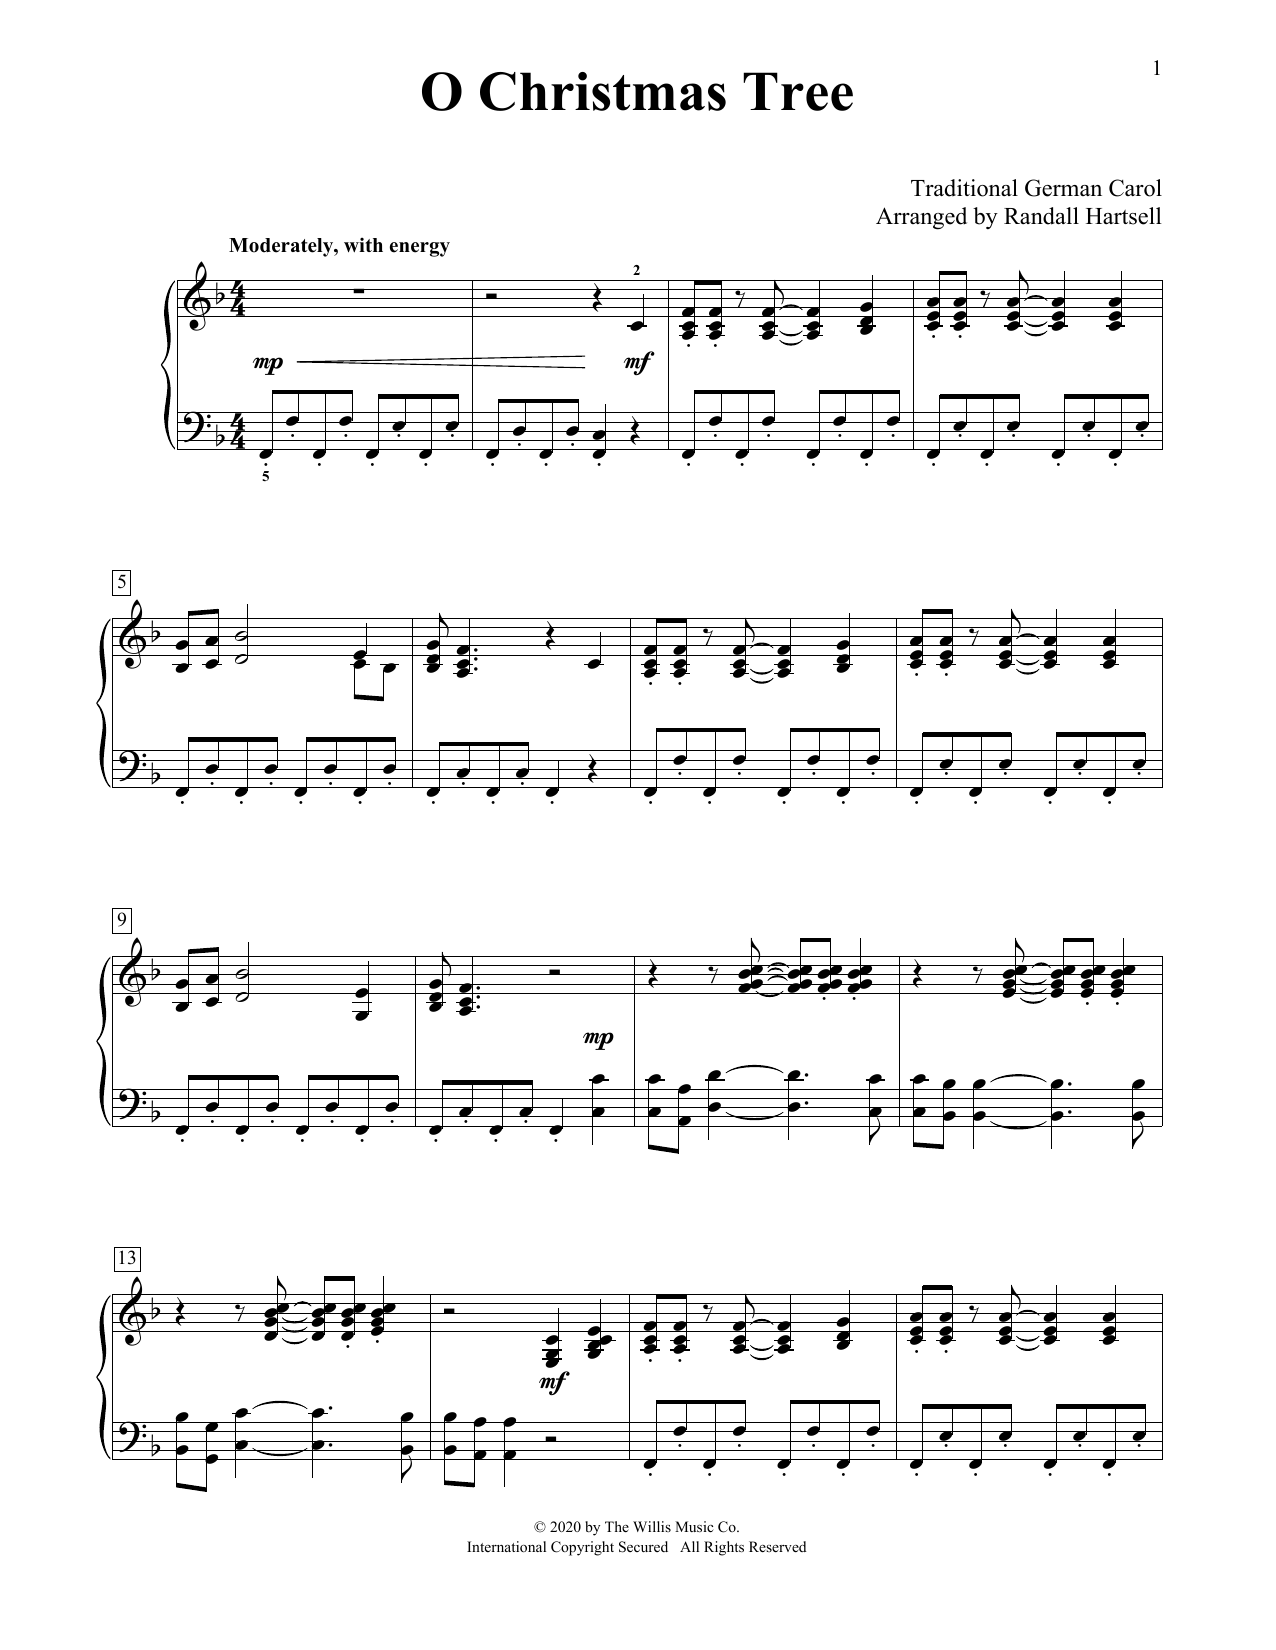 Traditional German Carol O Christmas Tree (arr. Randall Hartsell) Sheet Music Notes & Chords for Educational Piano - Download or Print PDF